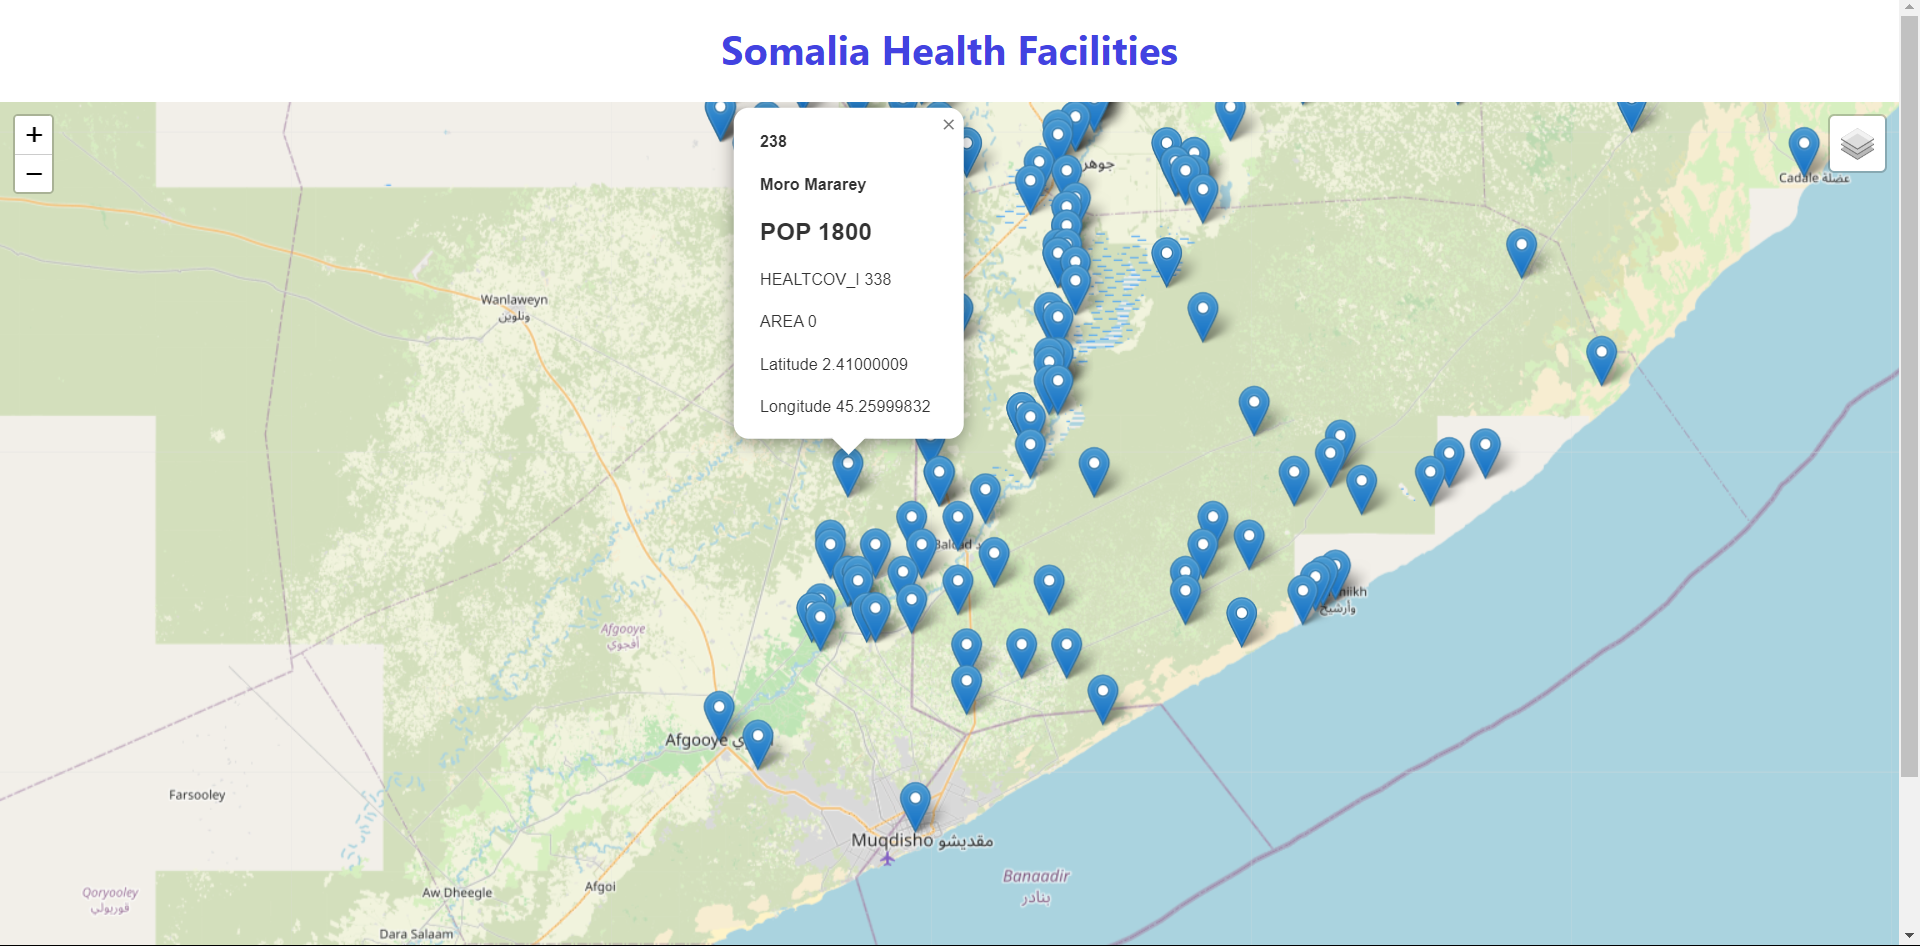 Somalia Health Facilities